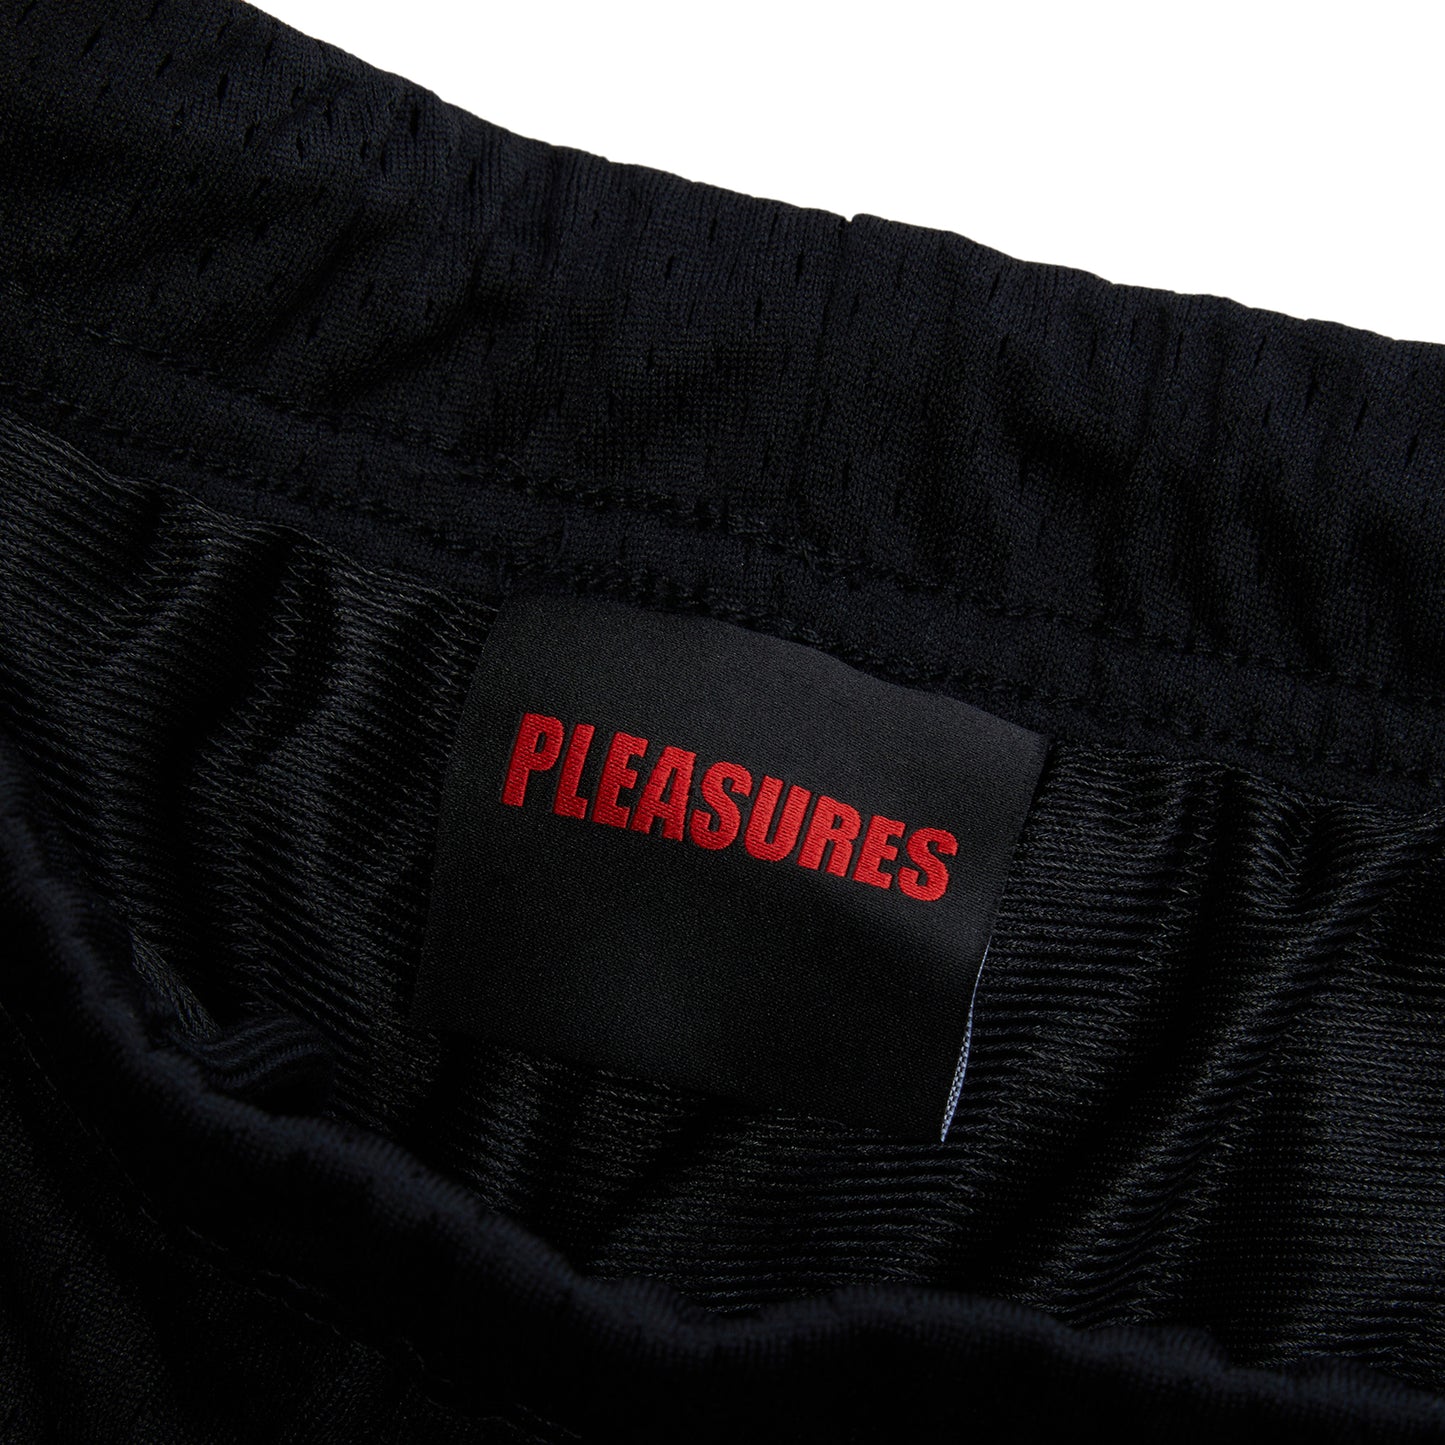 Pleasures Flame Mesh Shorts (Black)